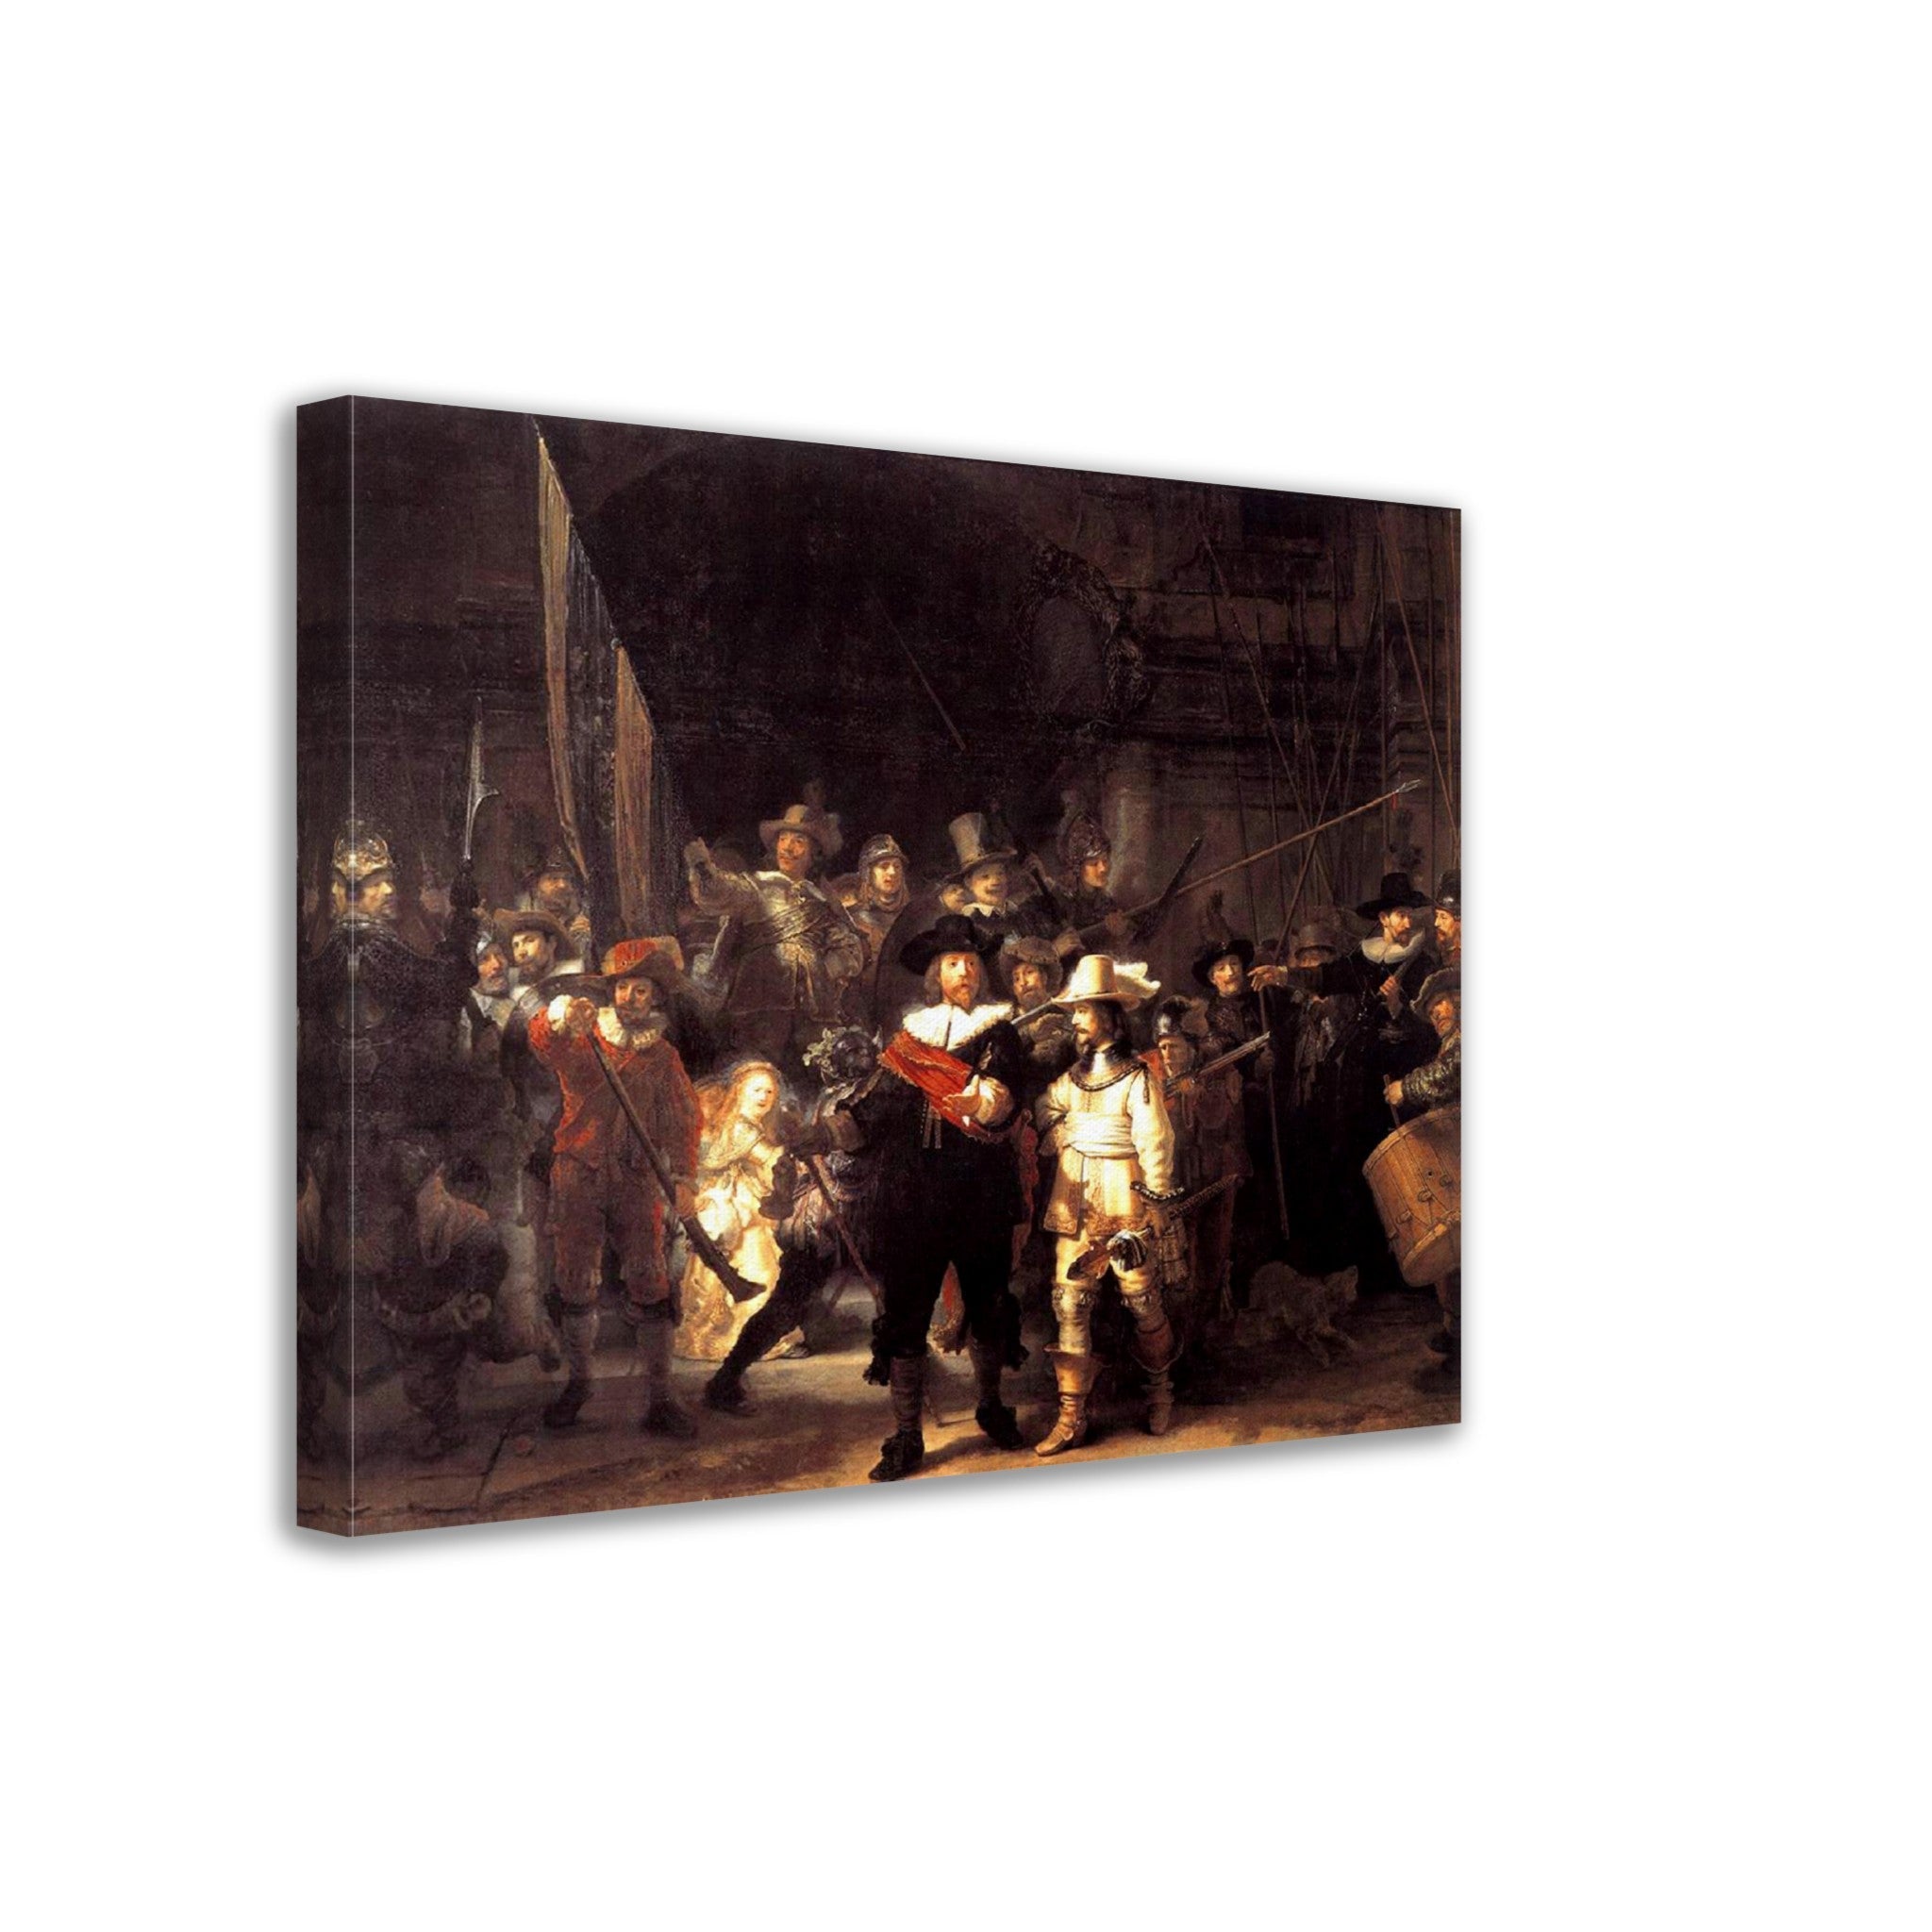 The Night Watch Canvas, Rembrandt Van Rijn - The Night Watch Canvas Print - WallArtPrints4U